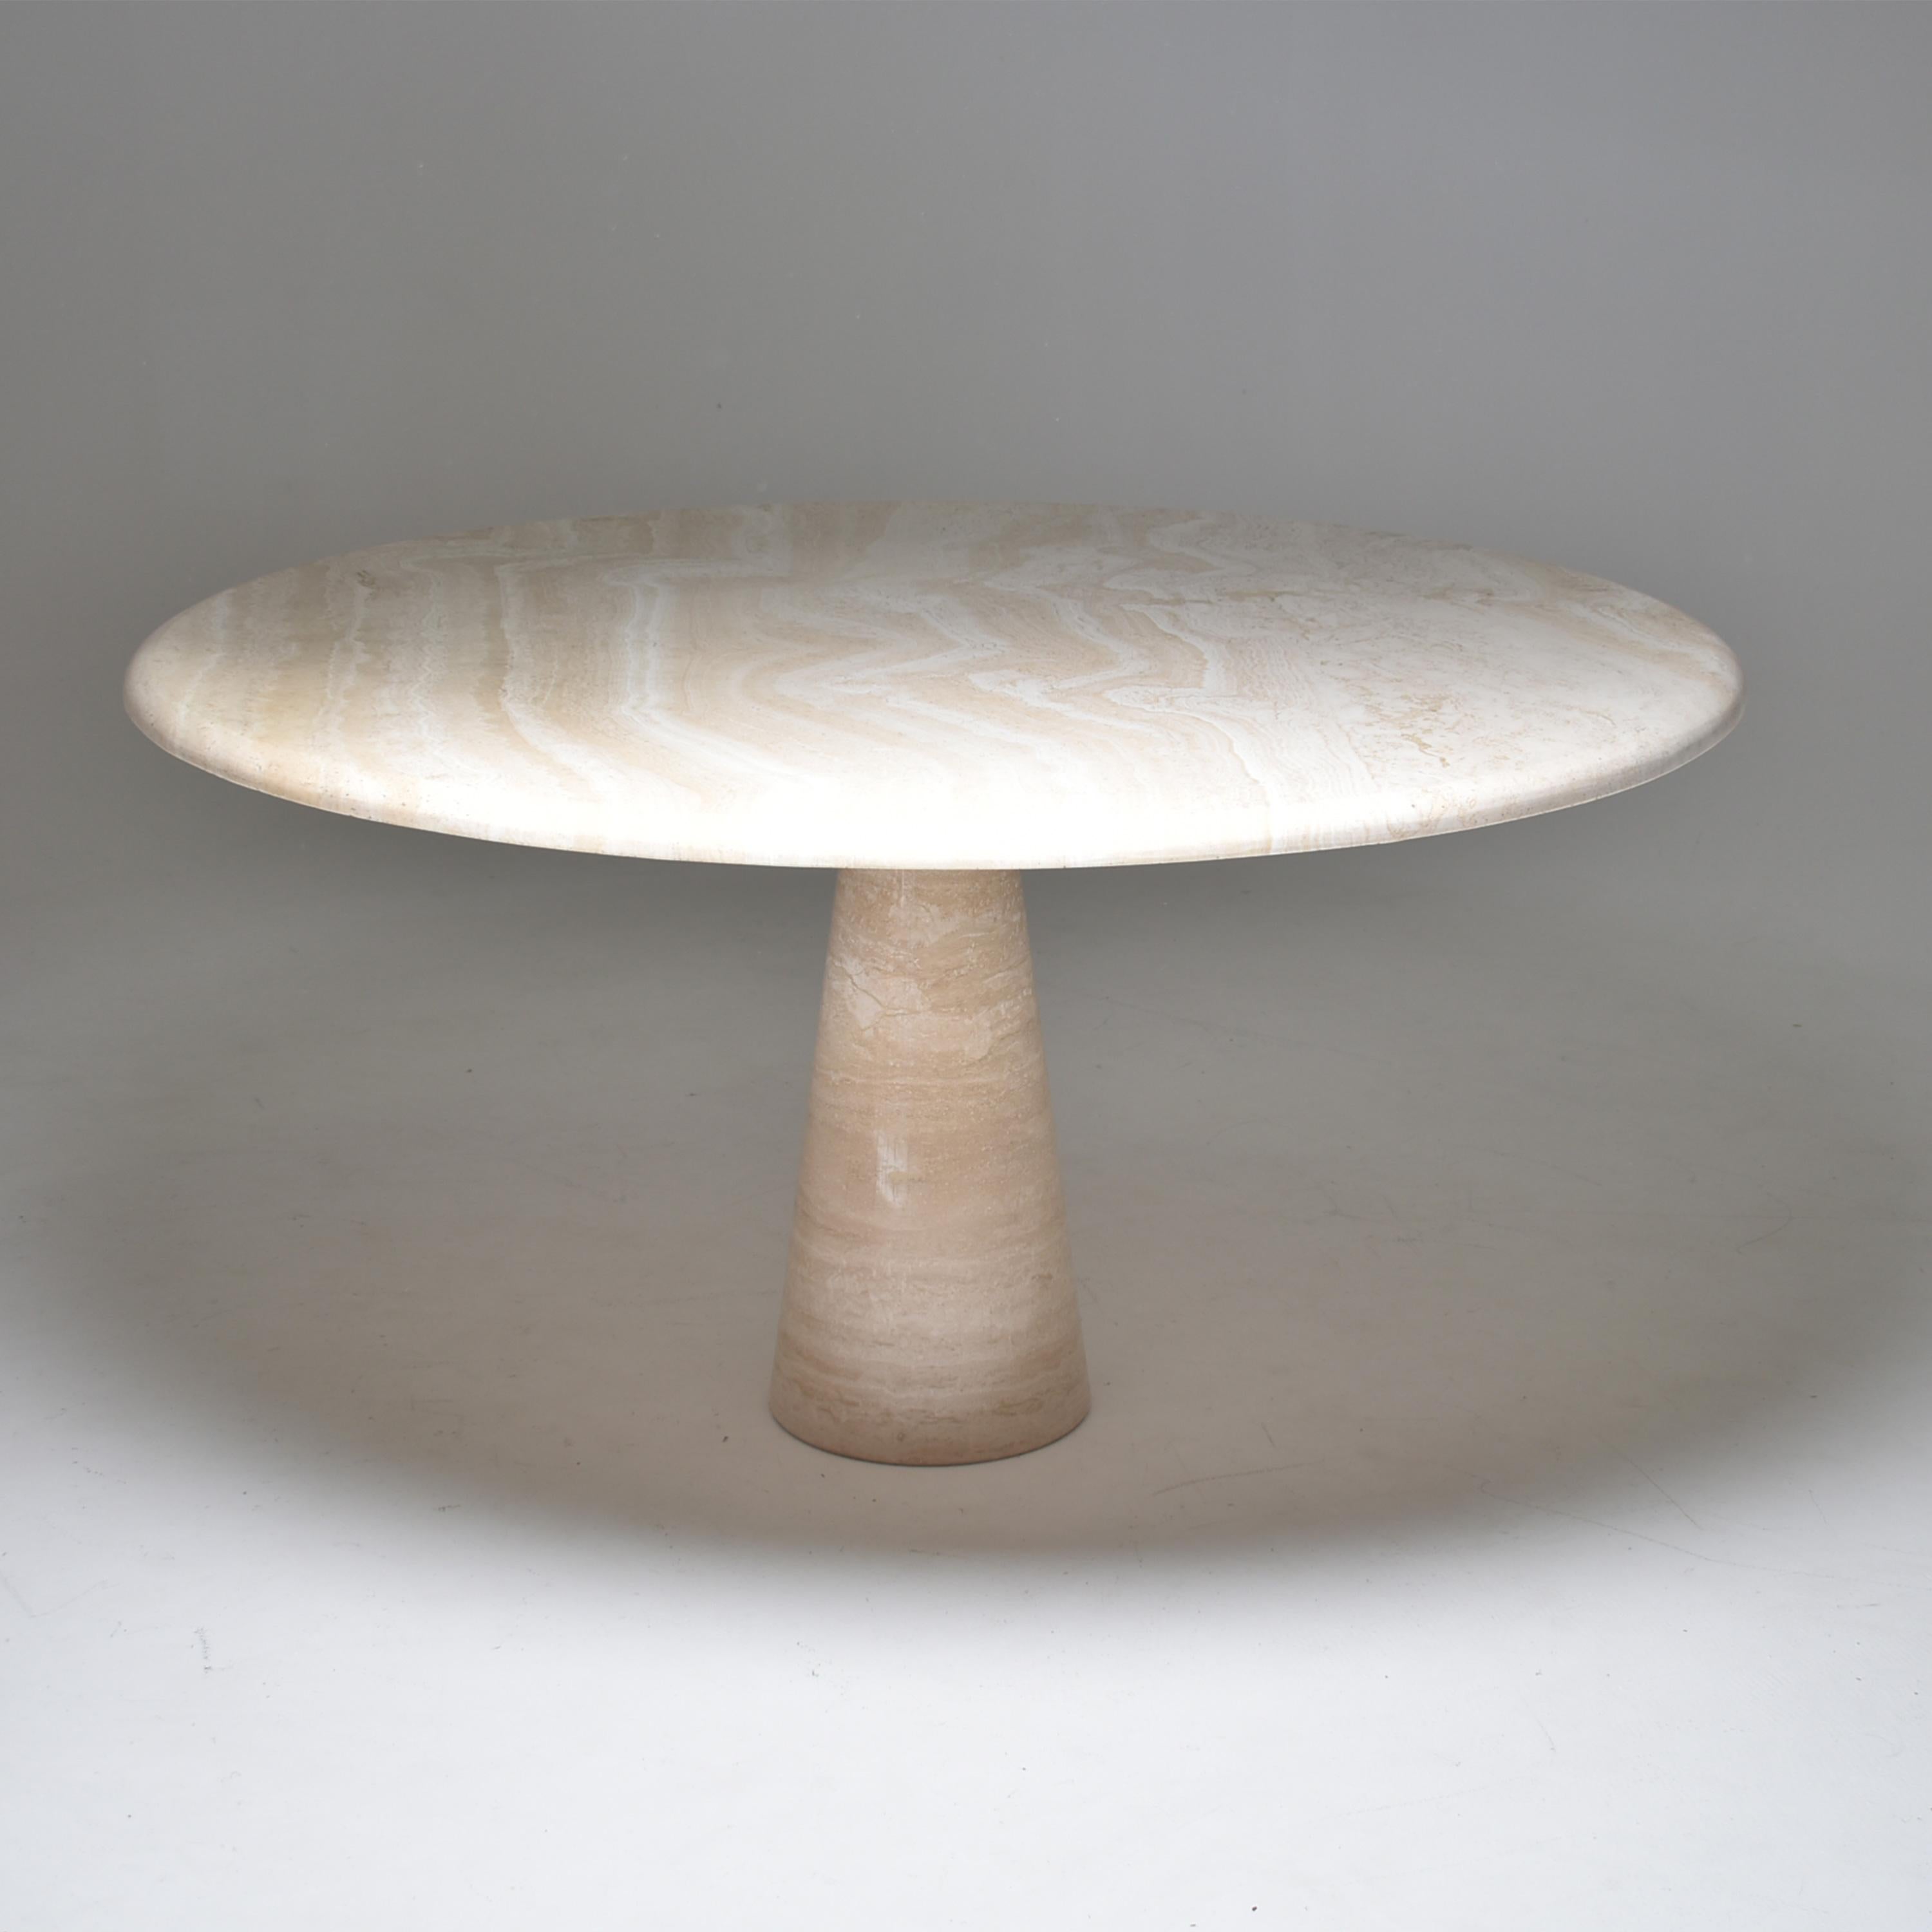 Late 20th Century Round Cream Travertine Pedestal Dining Table, Angelo Mangiarotti Style, Italy